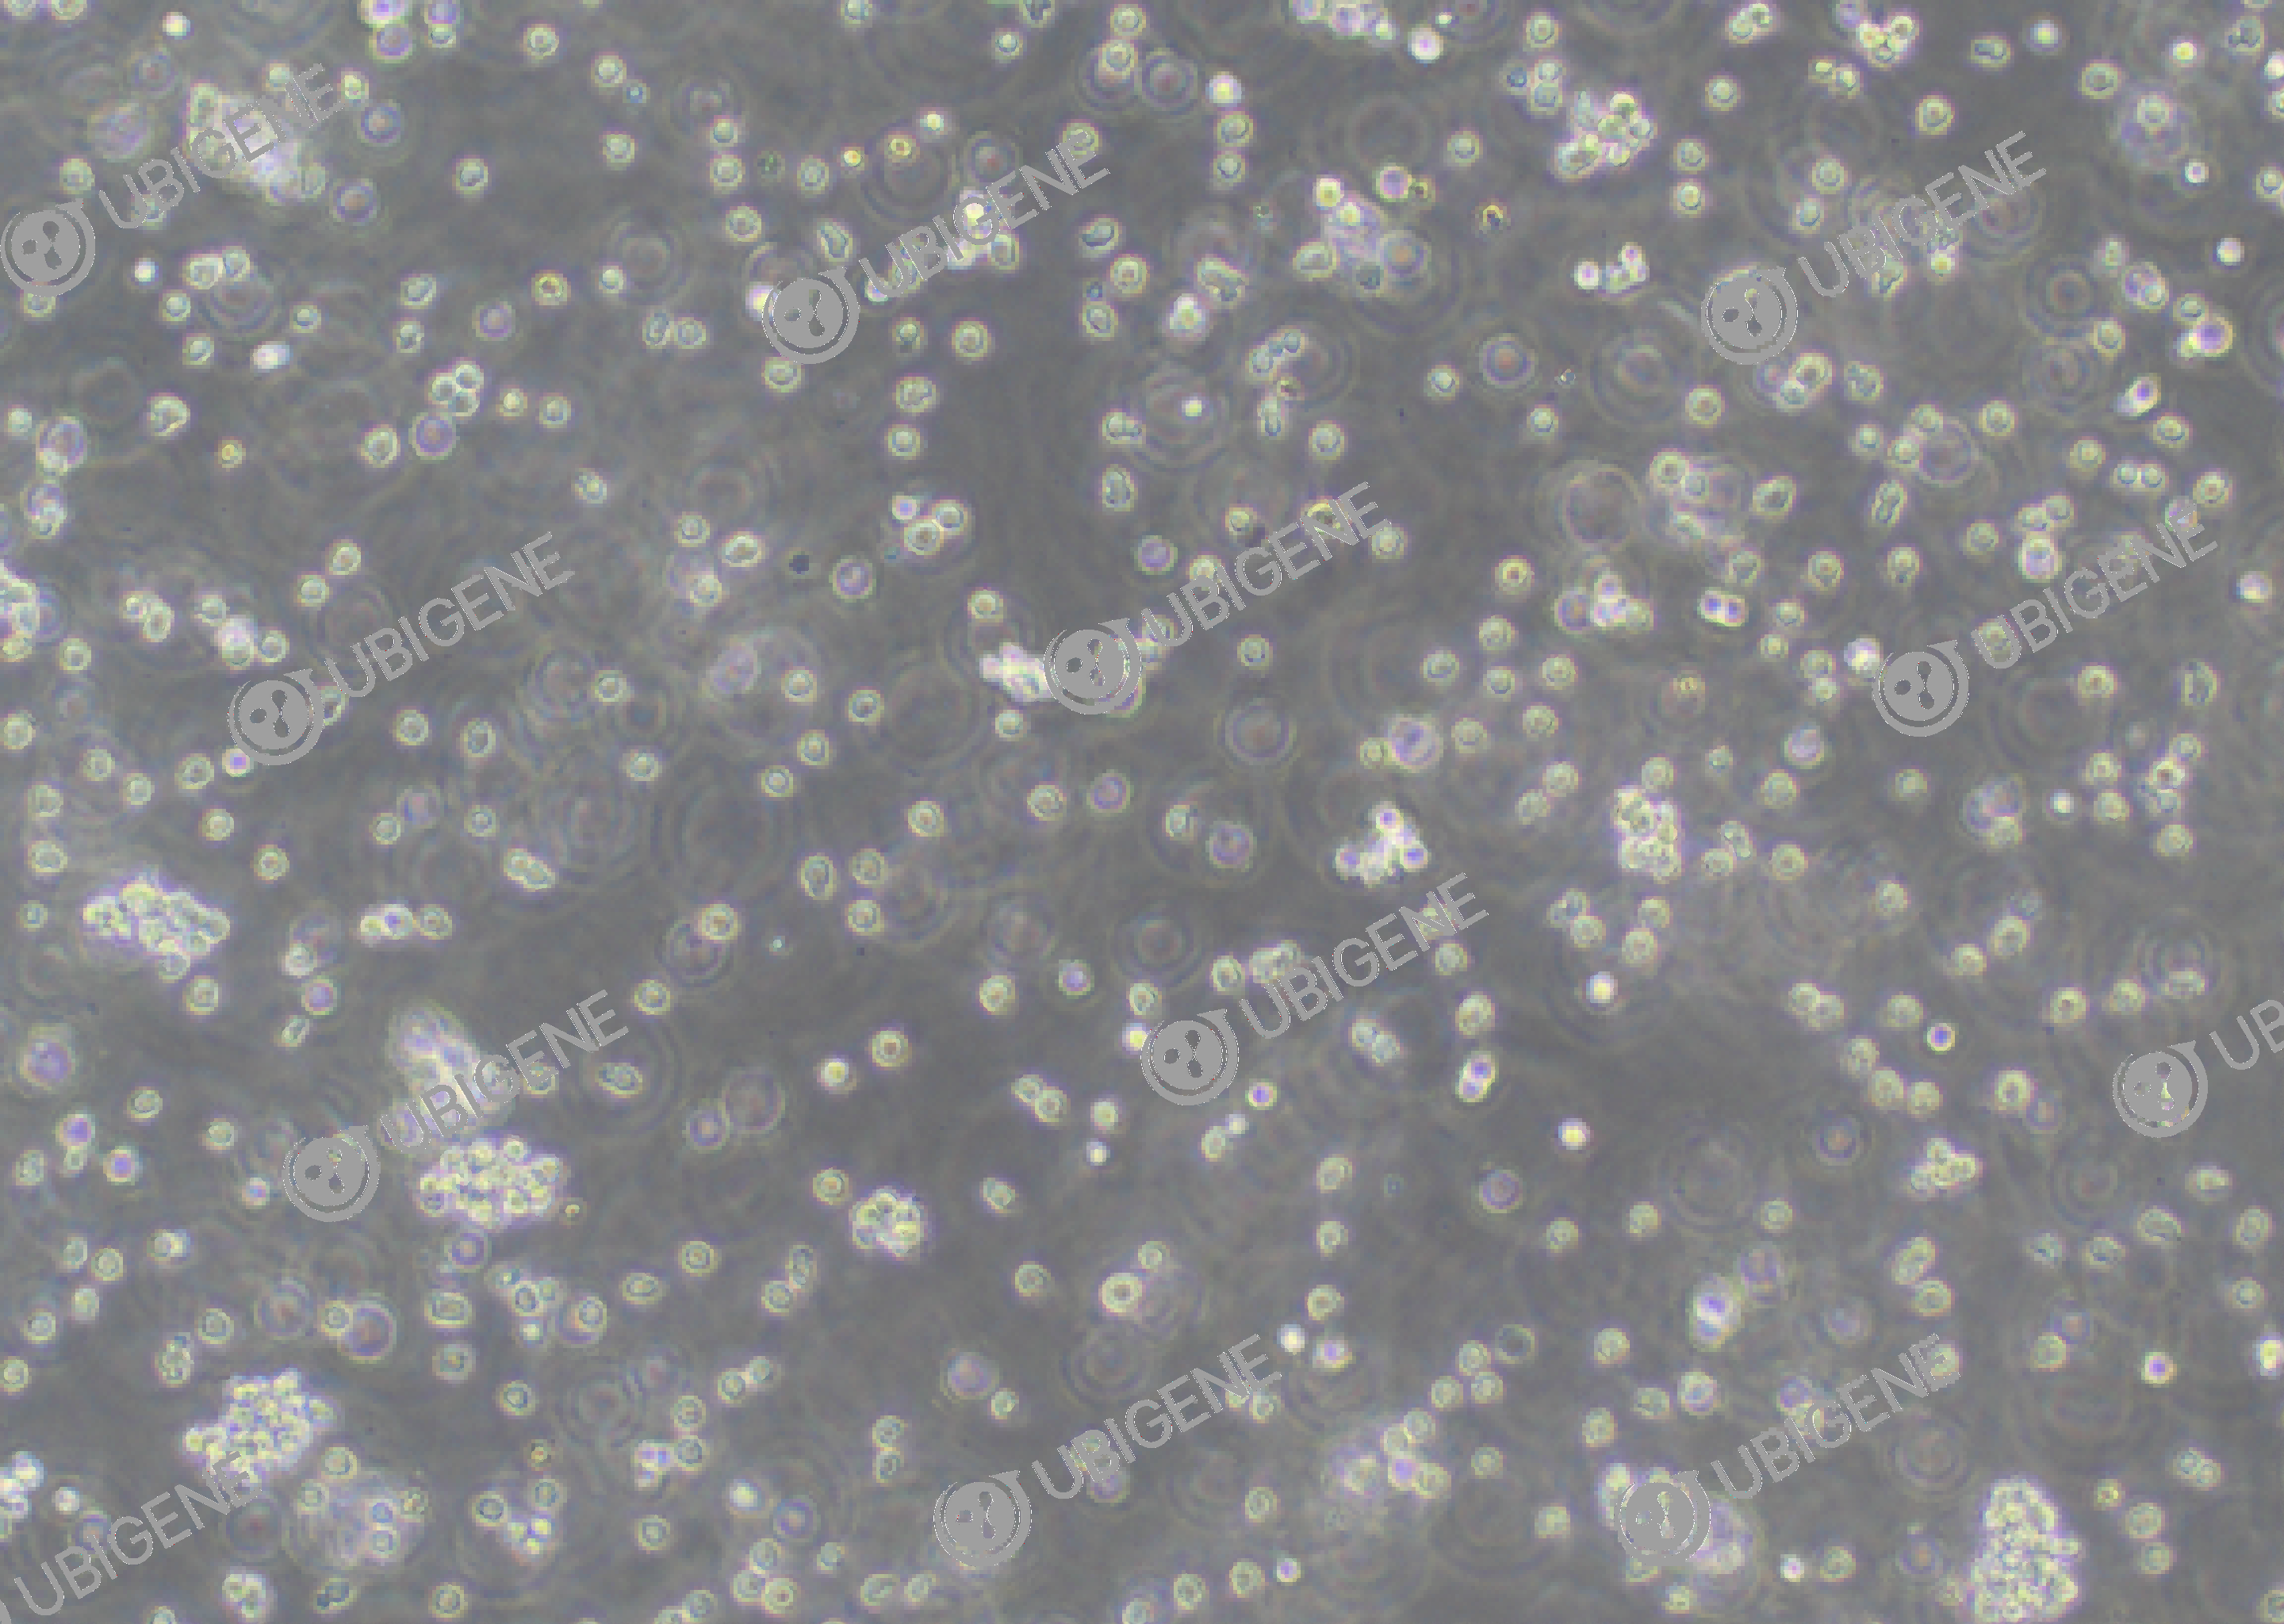 U-2932 cell line Cultured cell morphology